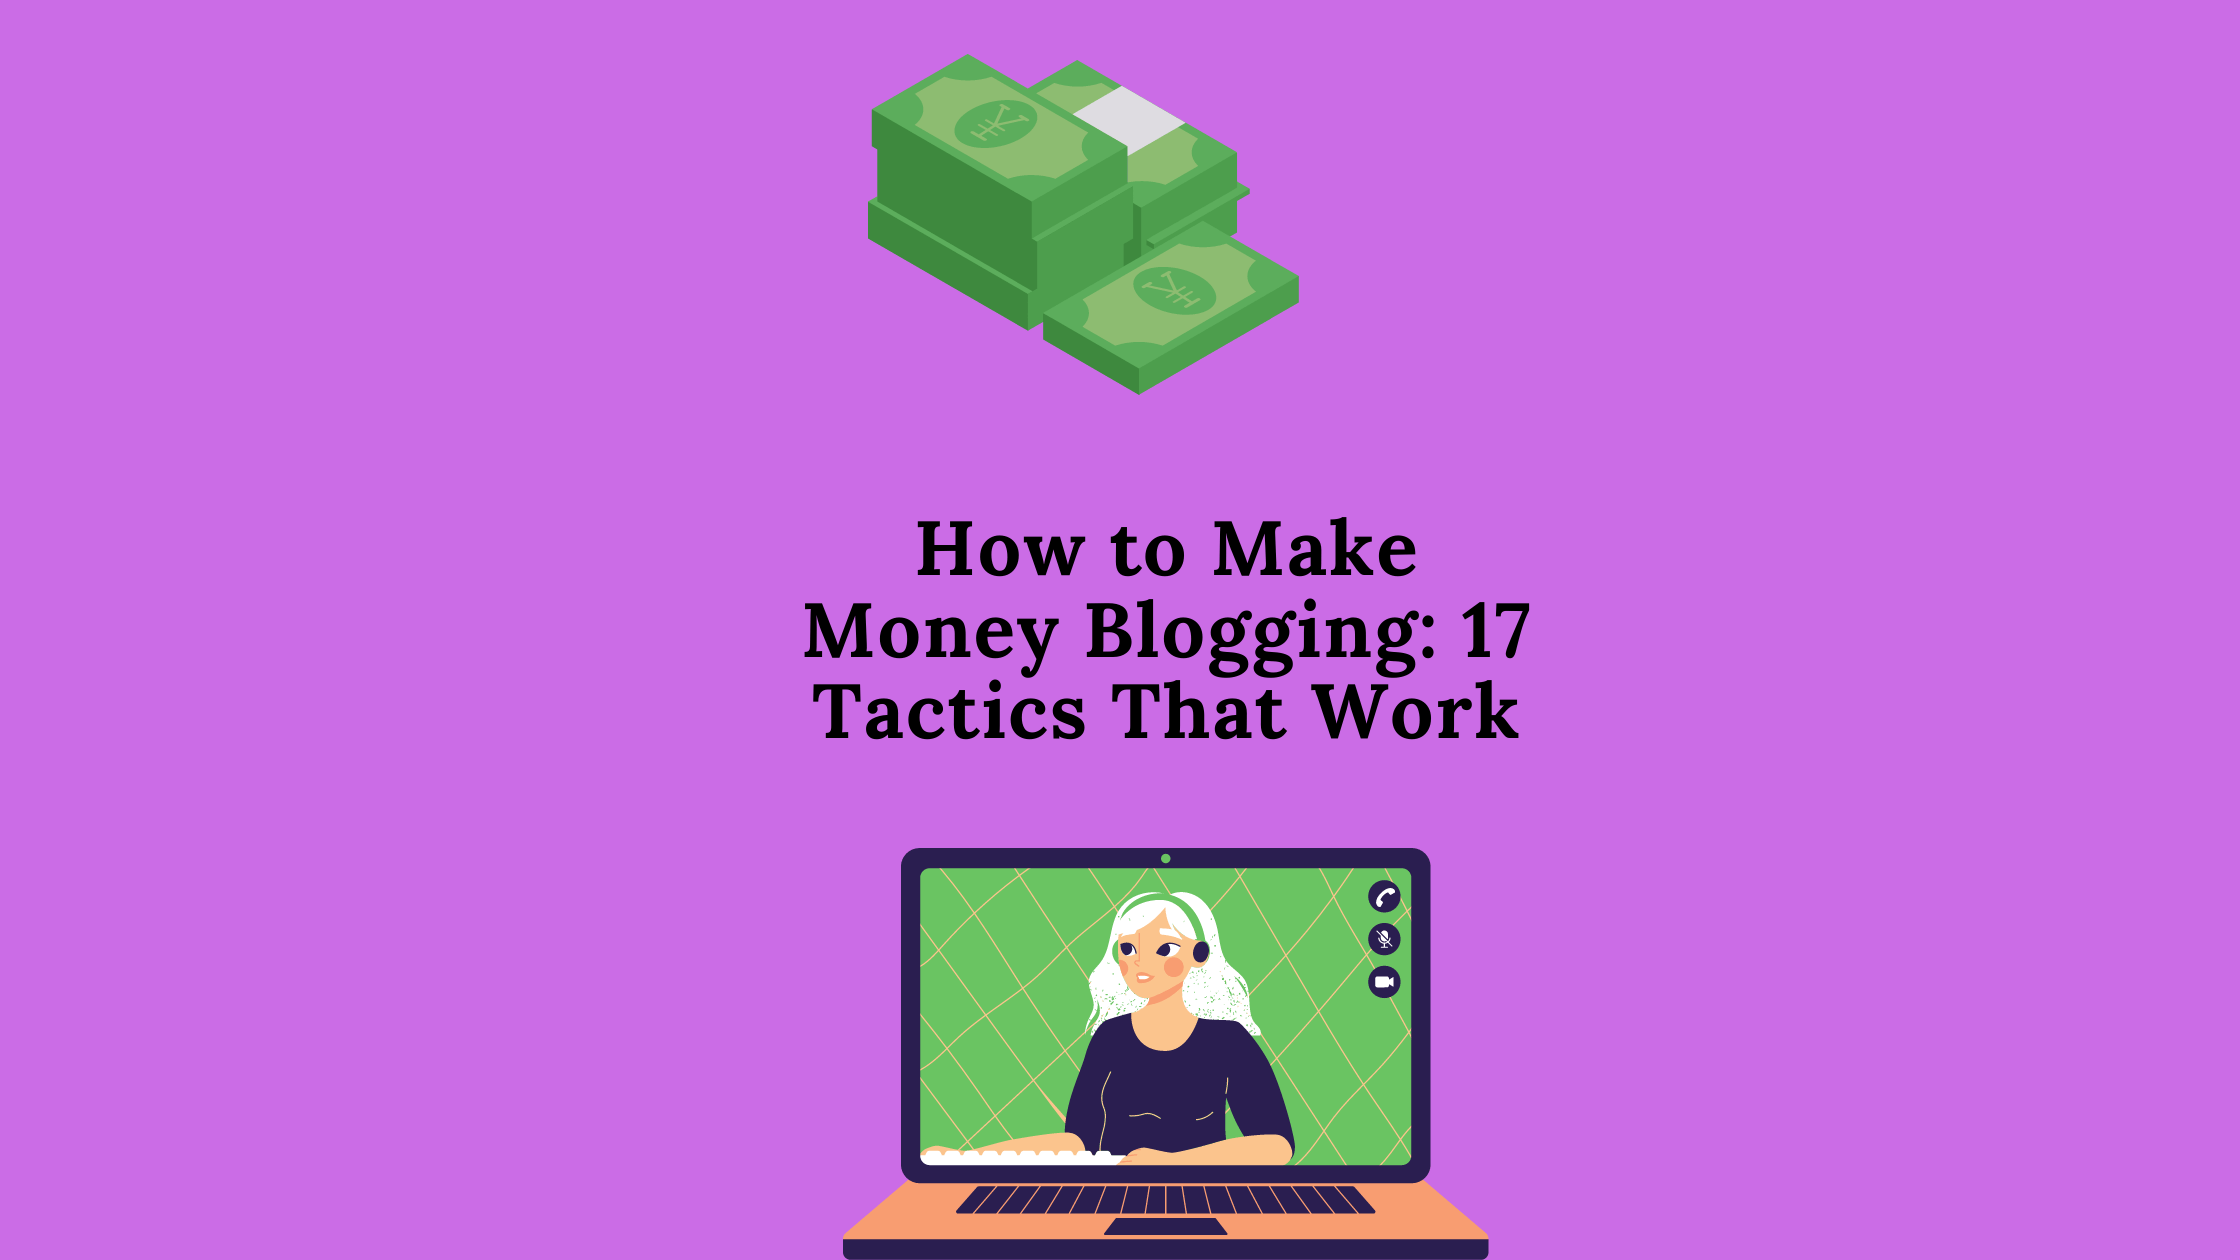 How to Make Money Blogging 17 Tactics That Work